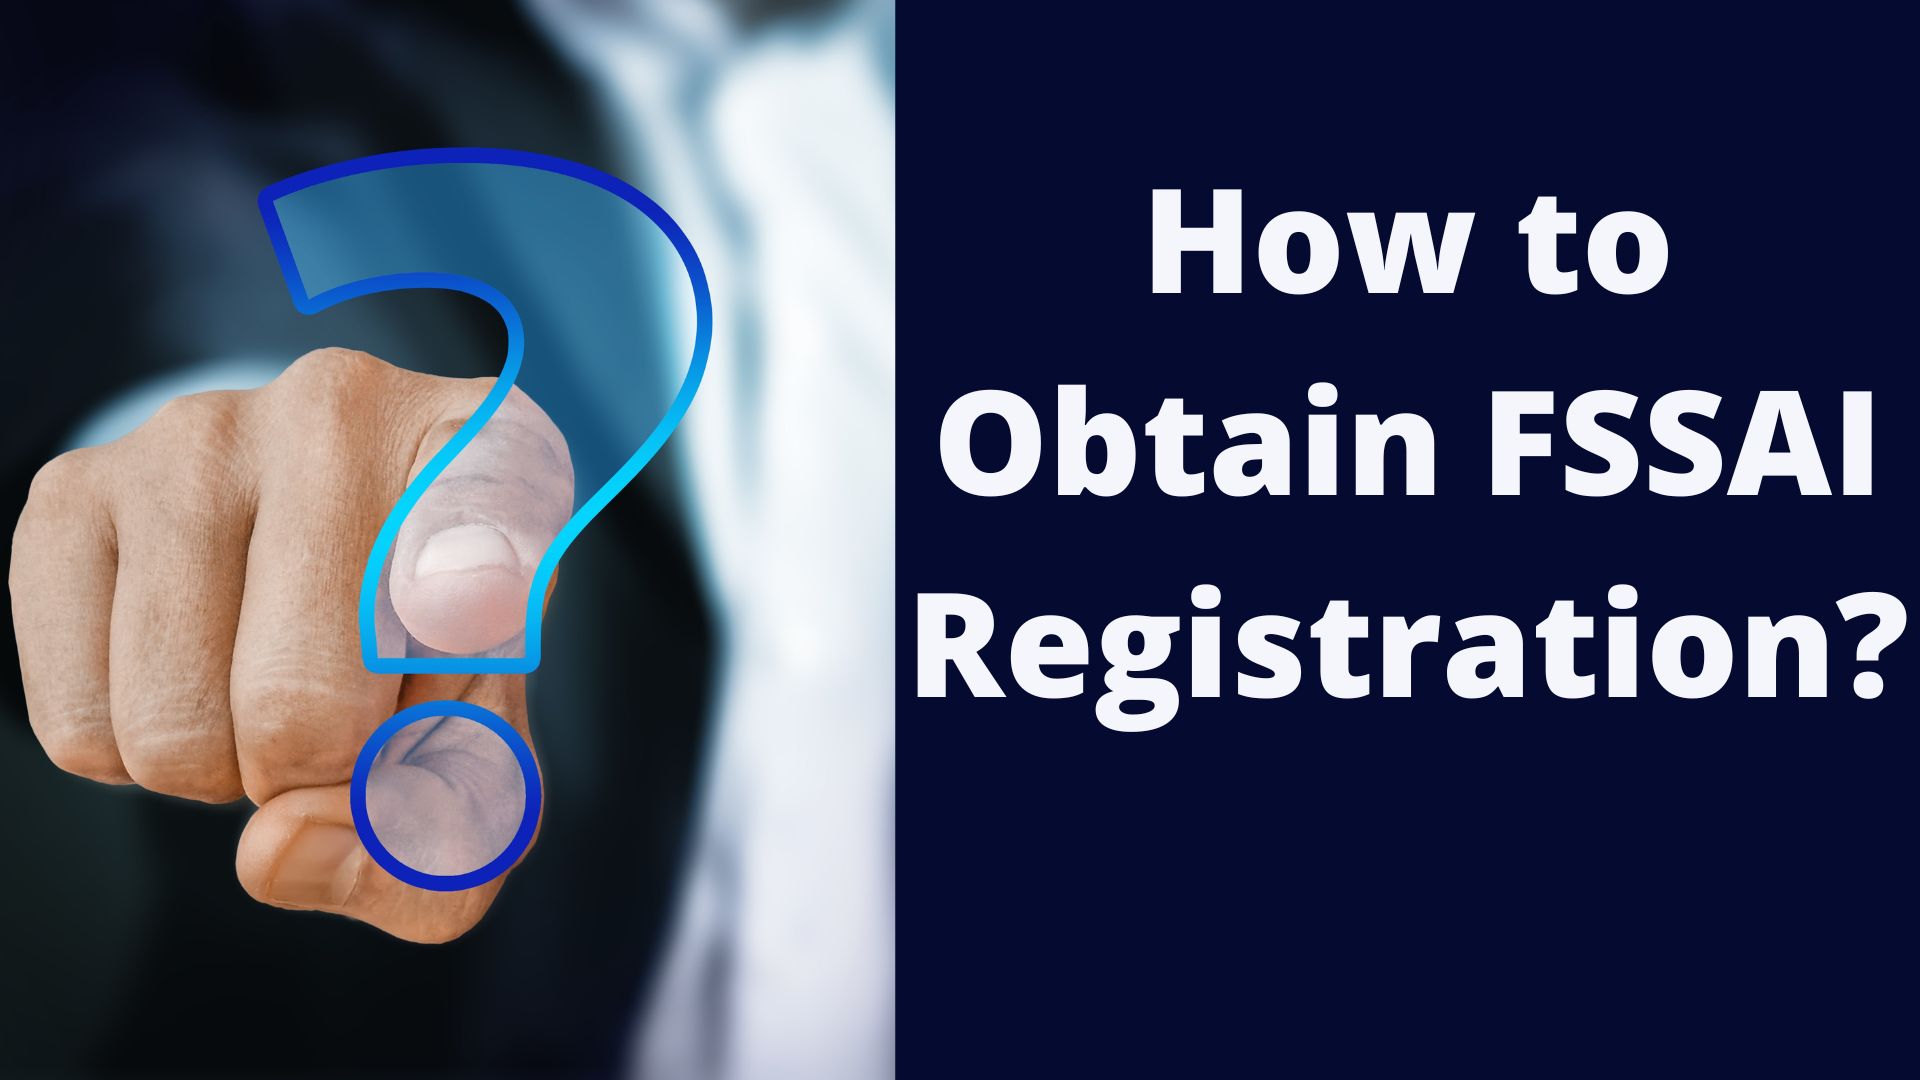 How to Obtain FSSAI Registration?